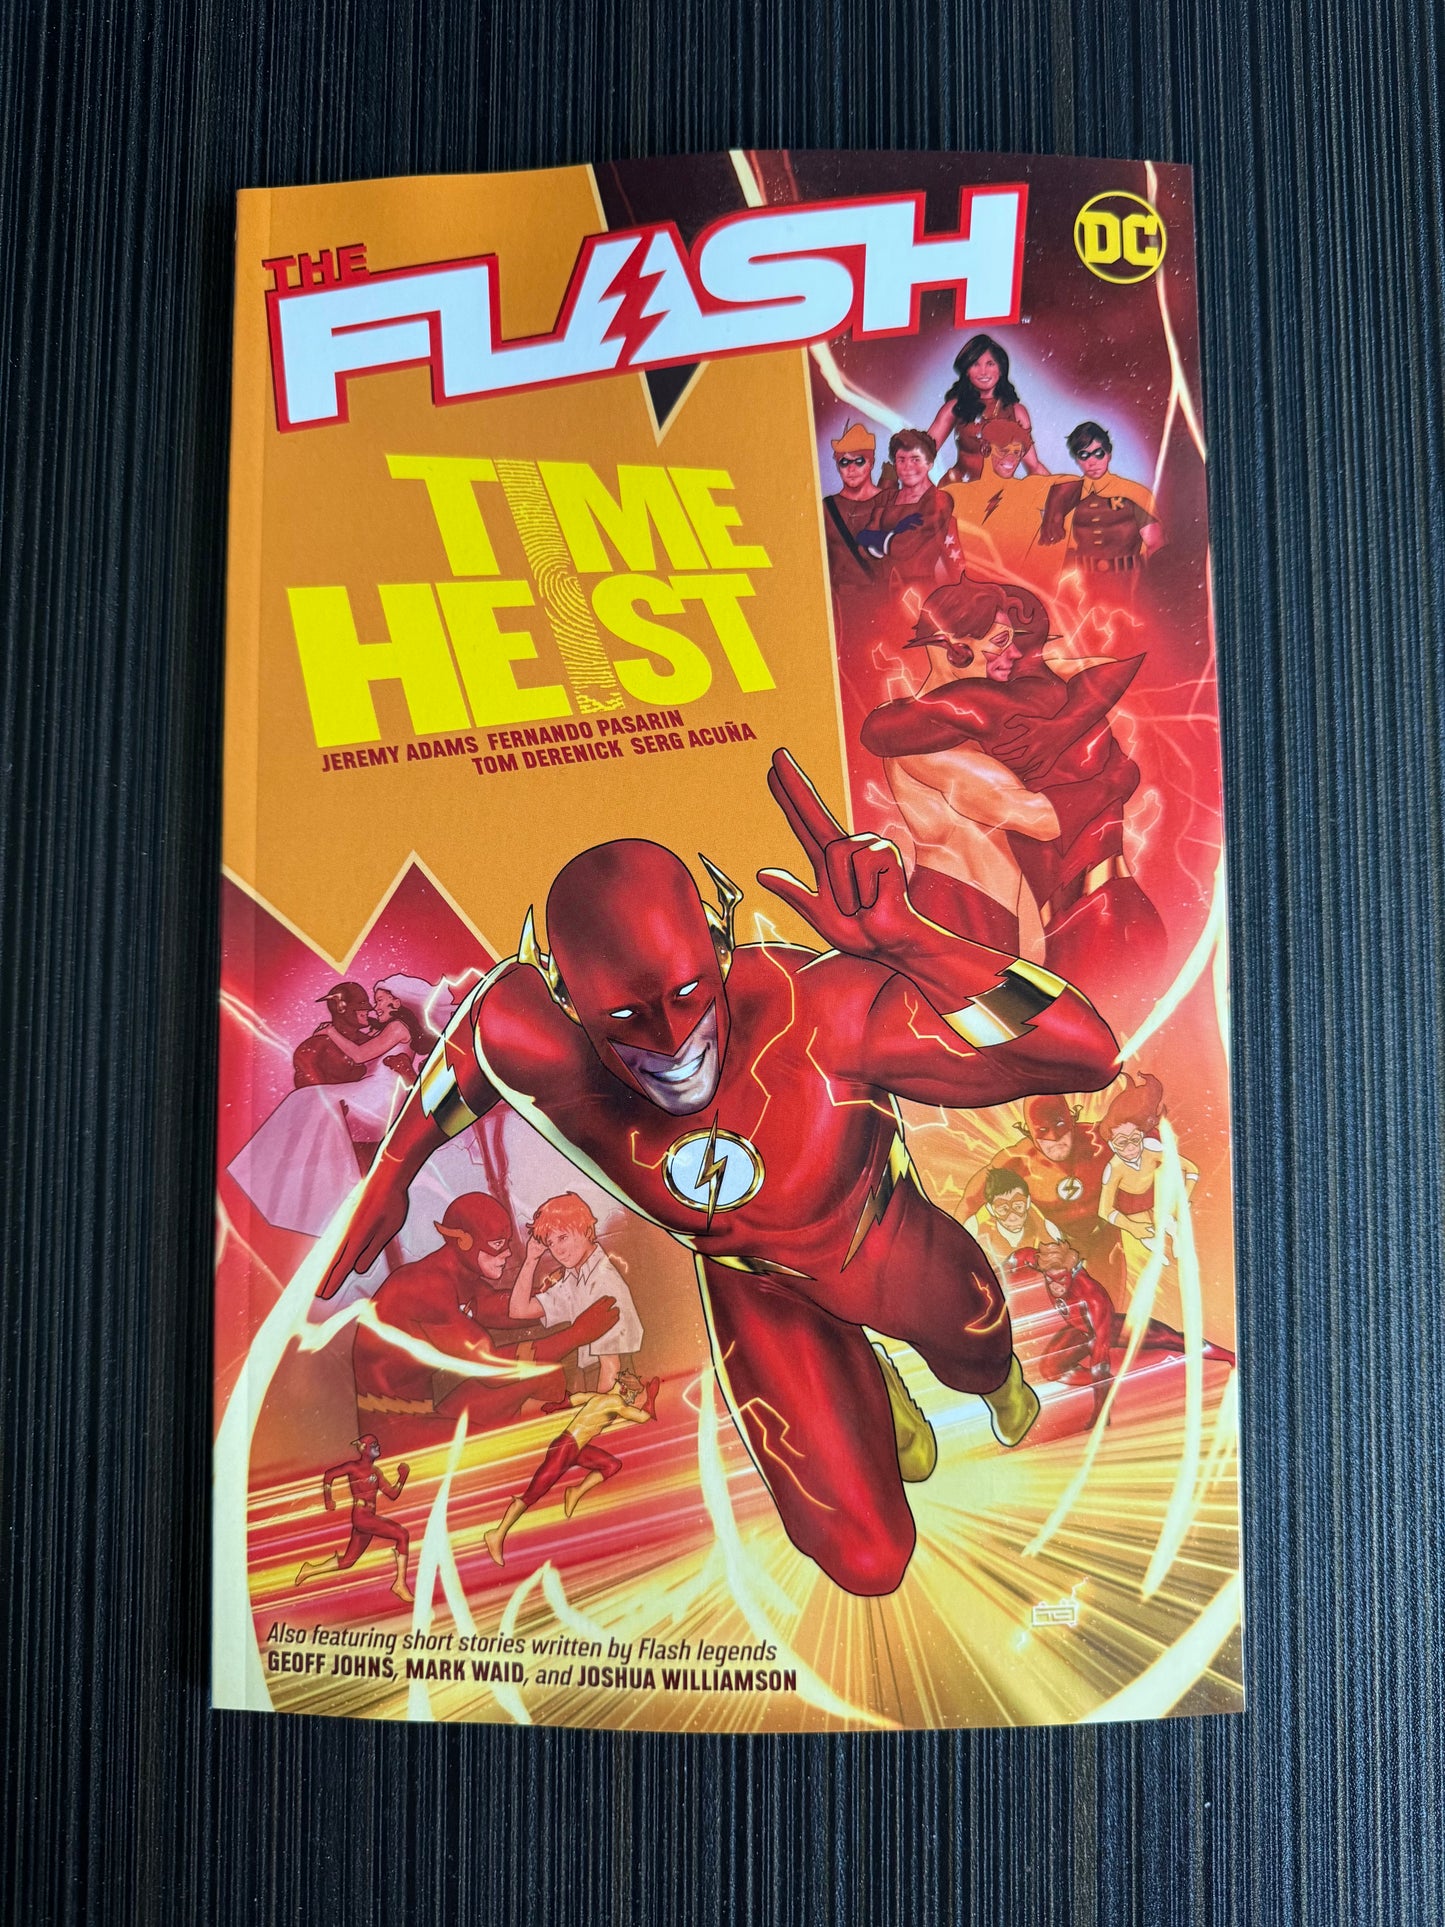 Flash (Rebirth) TP Vol 20 Time Heist (Pre-order only)